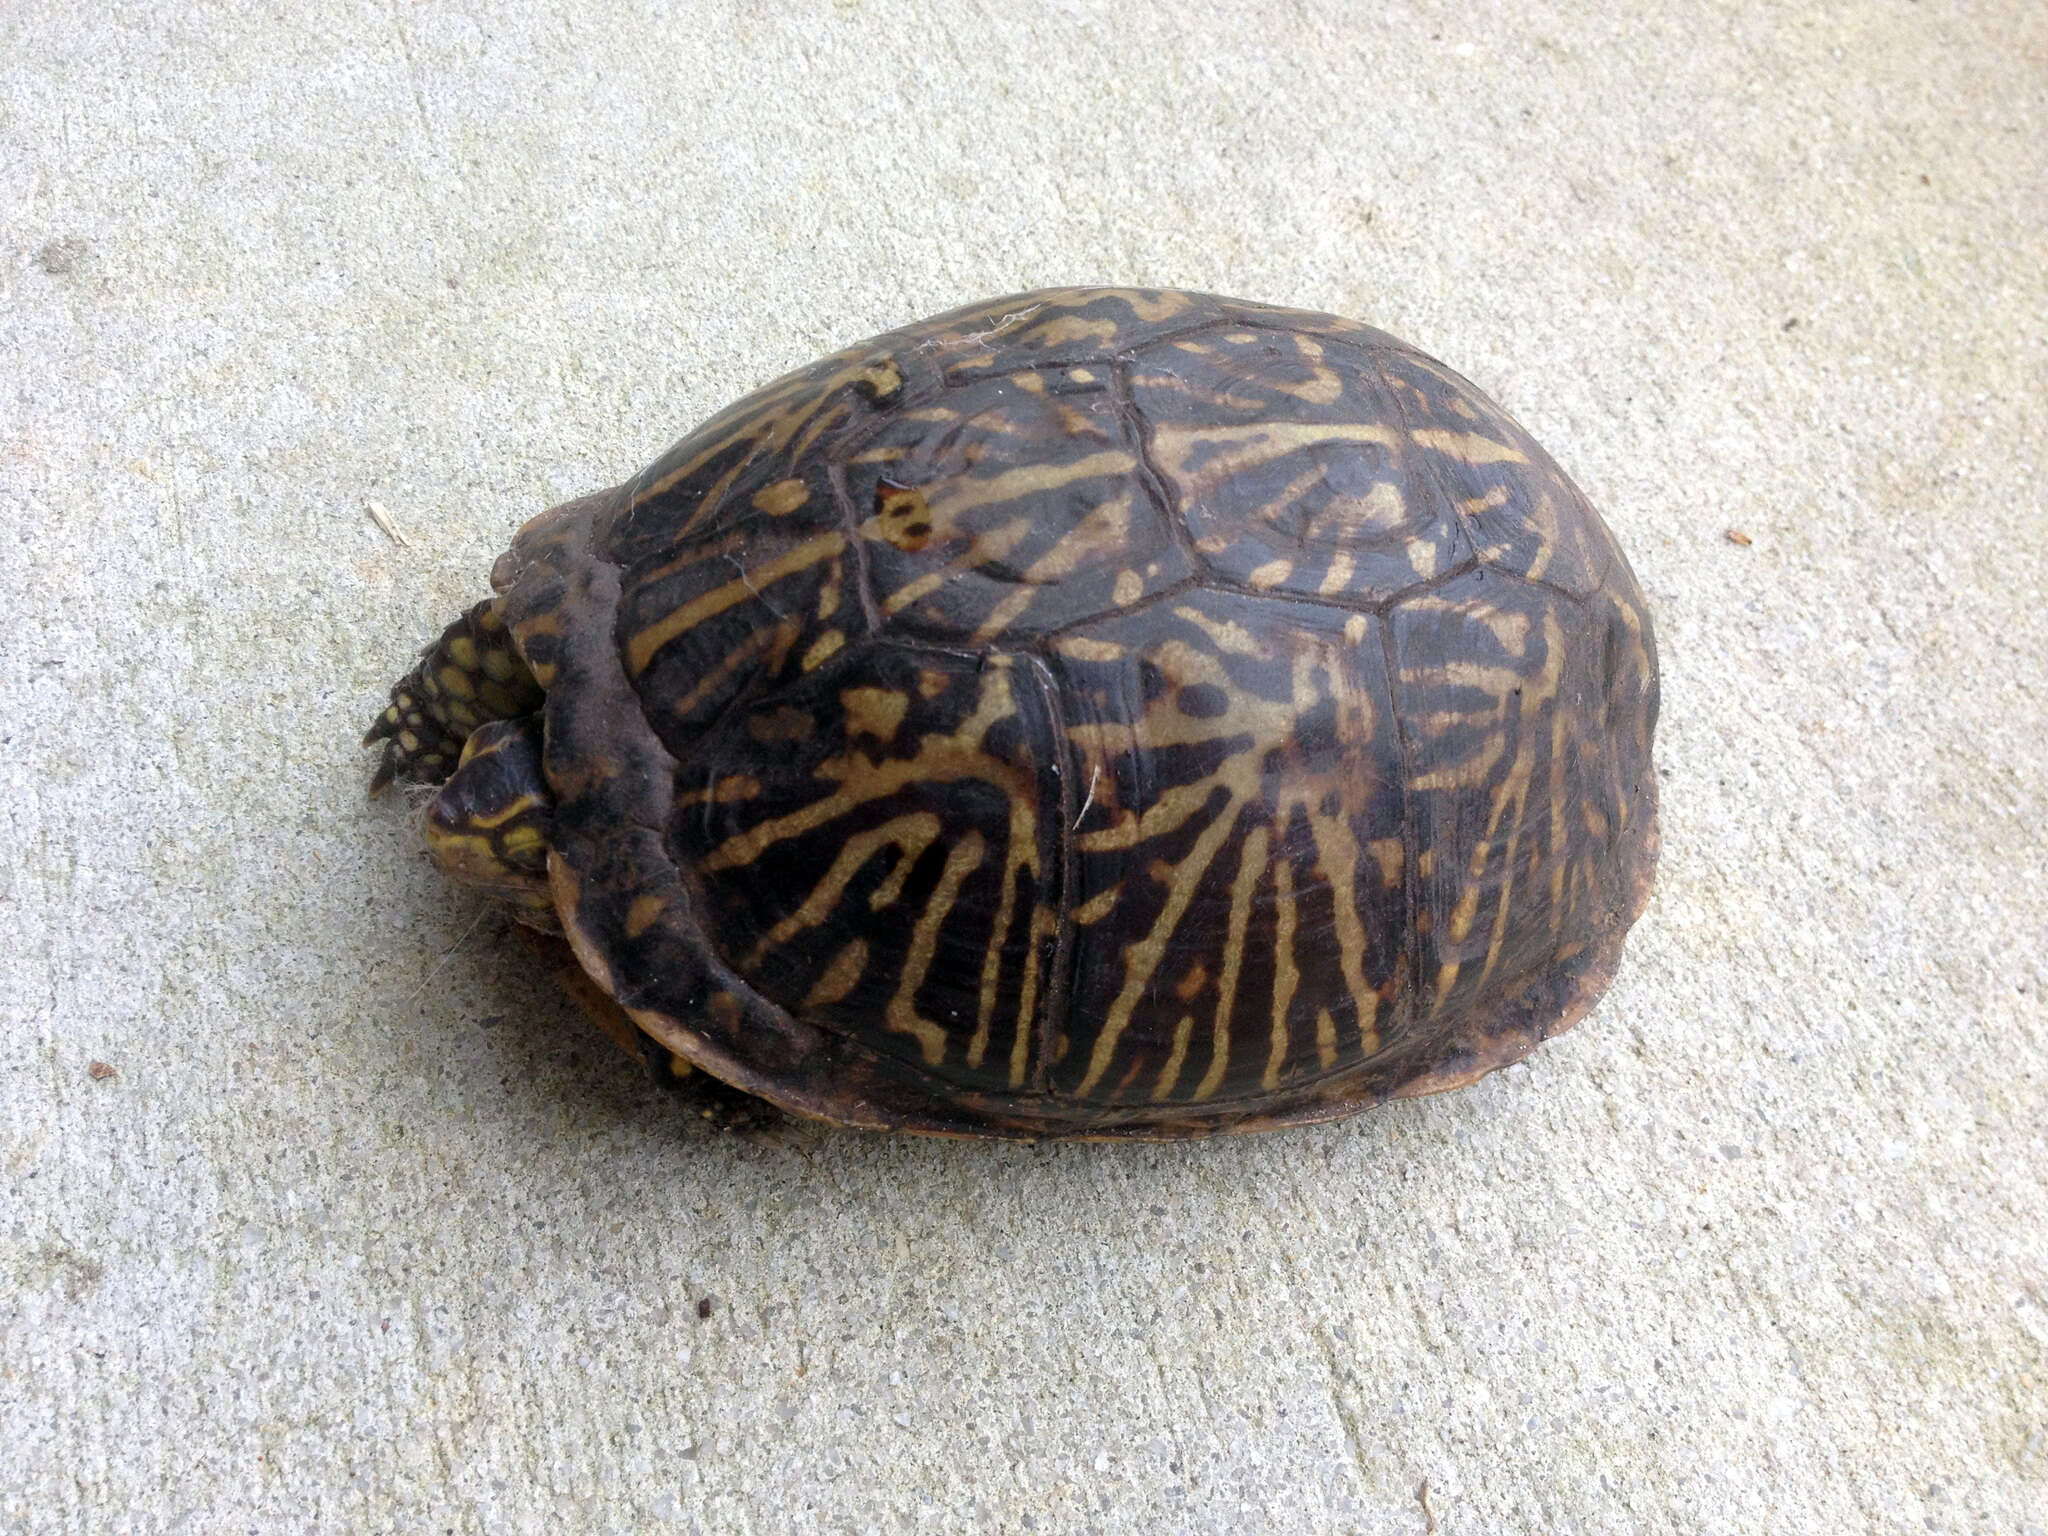 Image of Florida box turtle